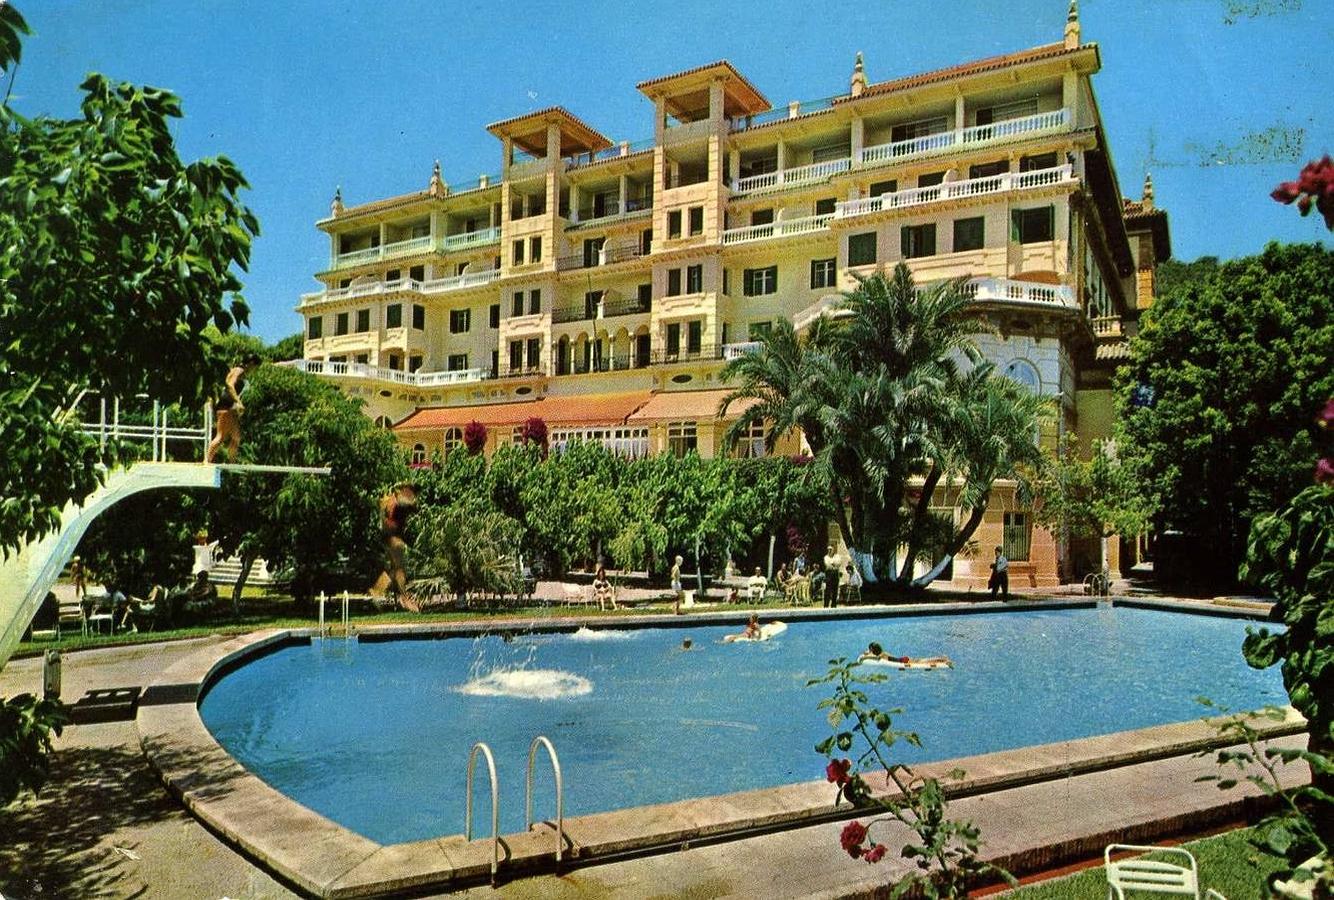 The Grand Hotel Miramar in Malaga